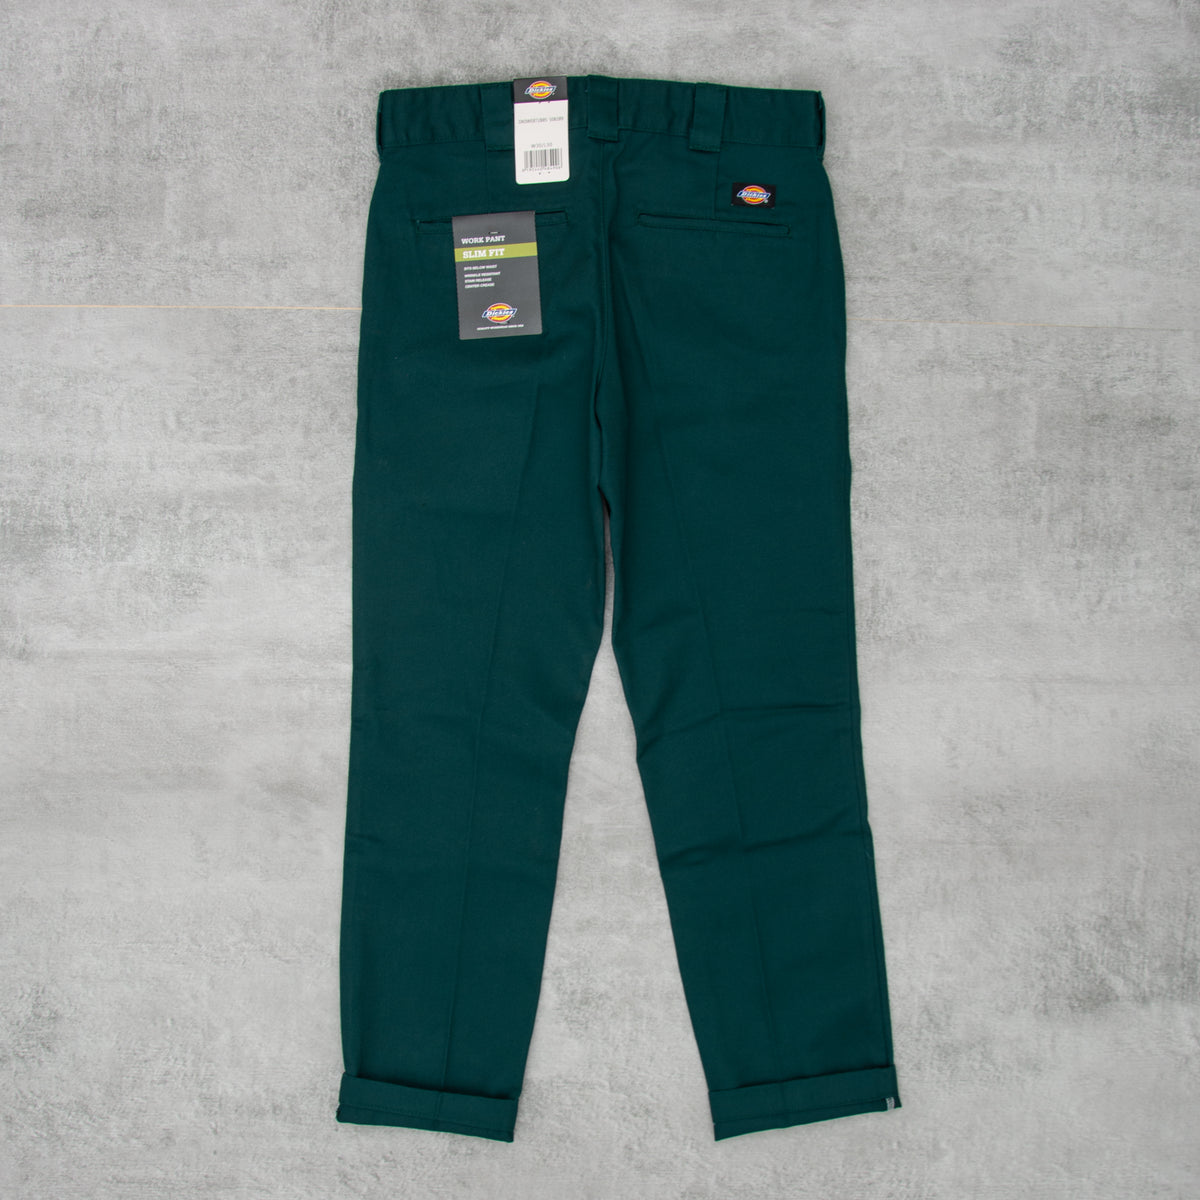 Buy Dickies 872 Slim Work Pant - Ponderosa Pine@Union Clothing | Union Clothing